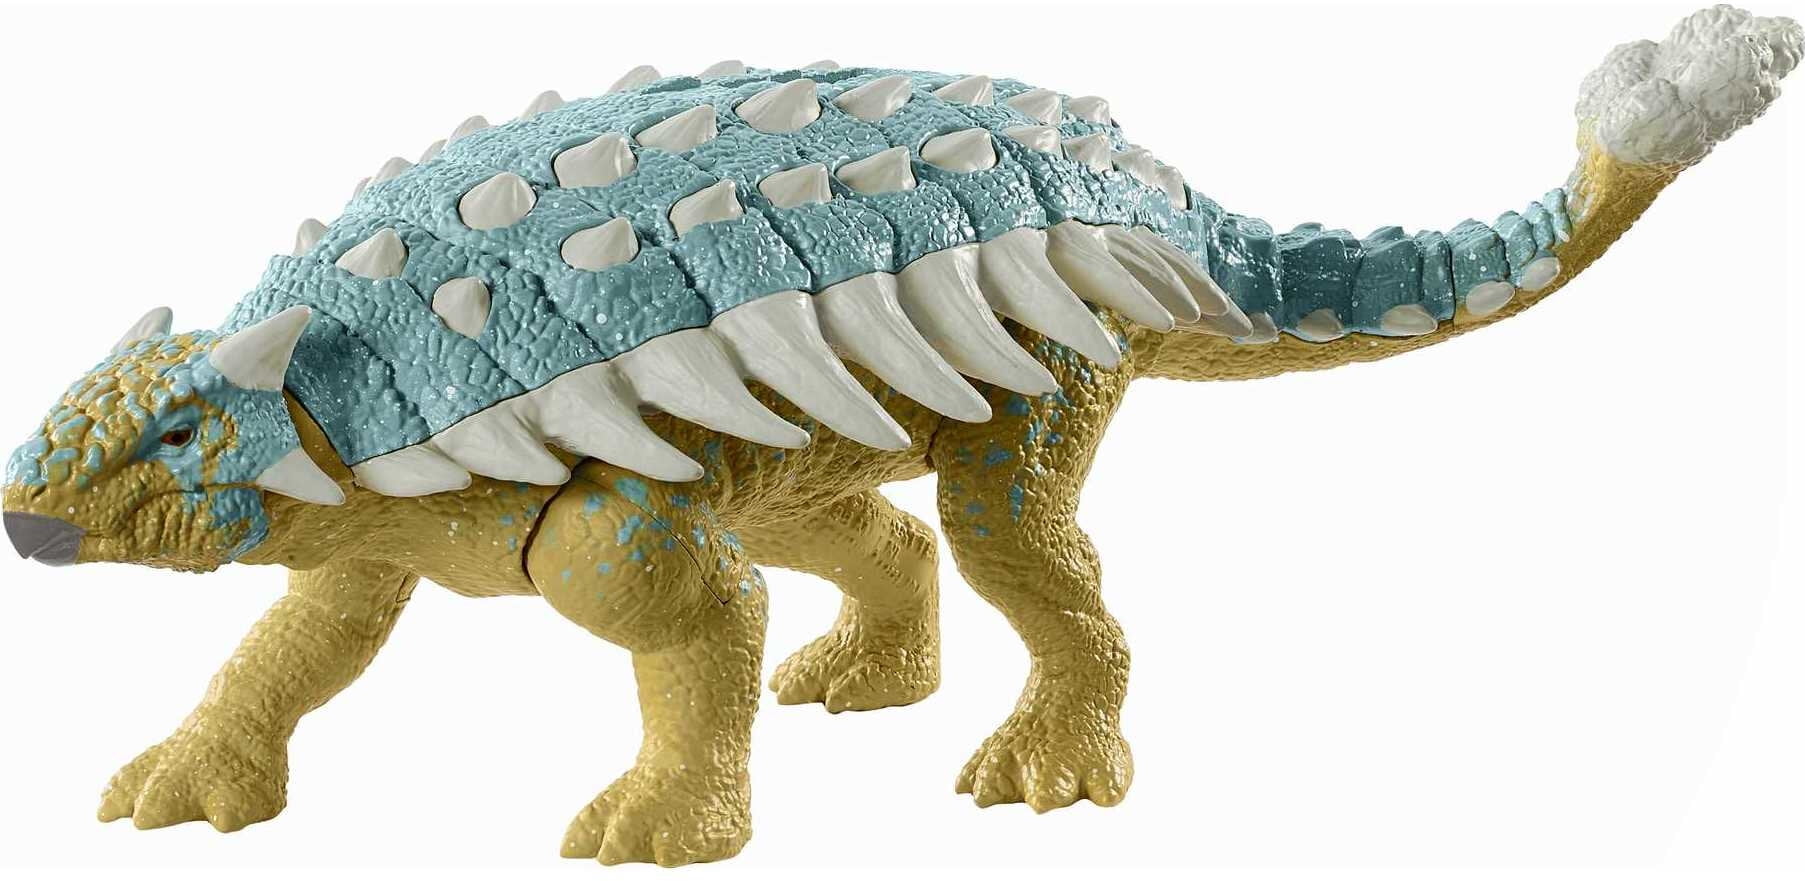 ANKYLOSAURUS Jurassic World Bumpy Camp Cretaceous Dinosaur Toy Figure NEU 